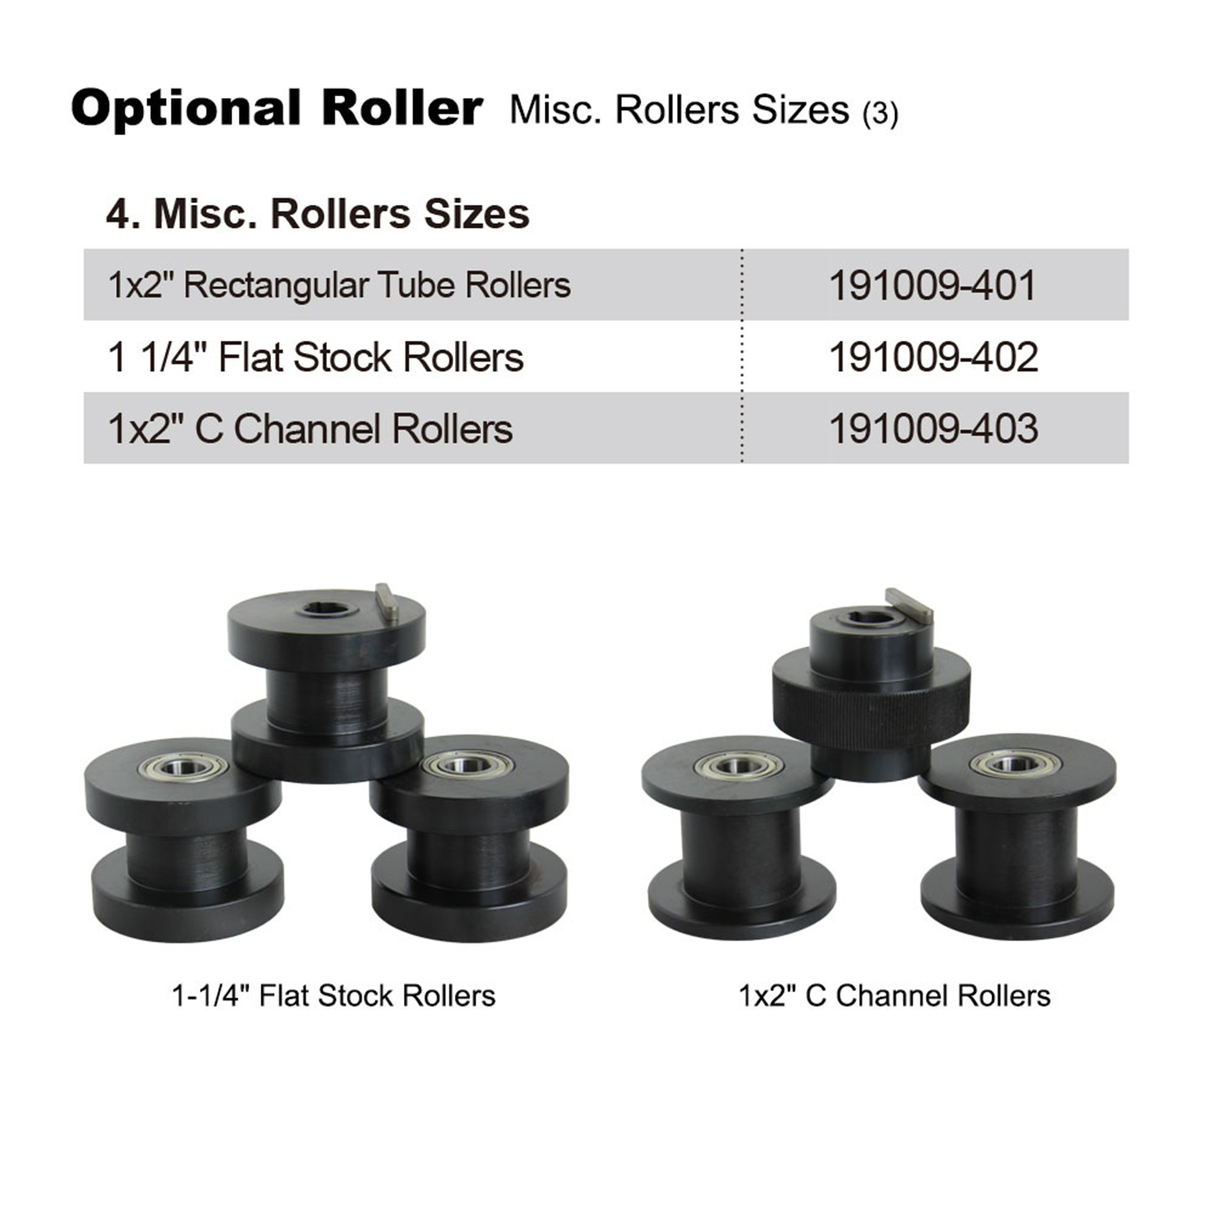 KANG Industrial TR-60 Tube Roll Bender, Manual 3 Roll Bender Versatility Bender, standard 38mm round tube rollers